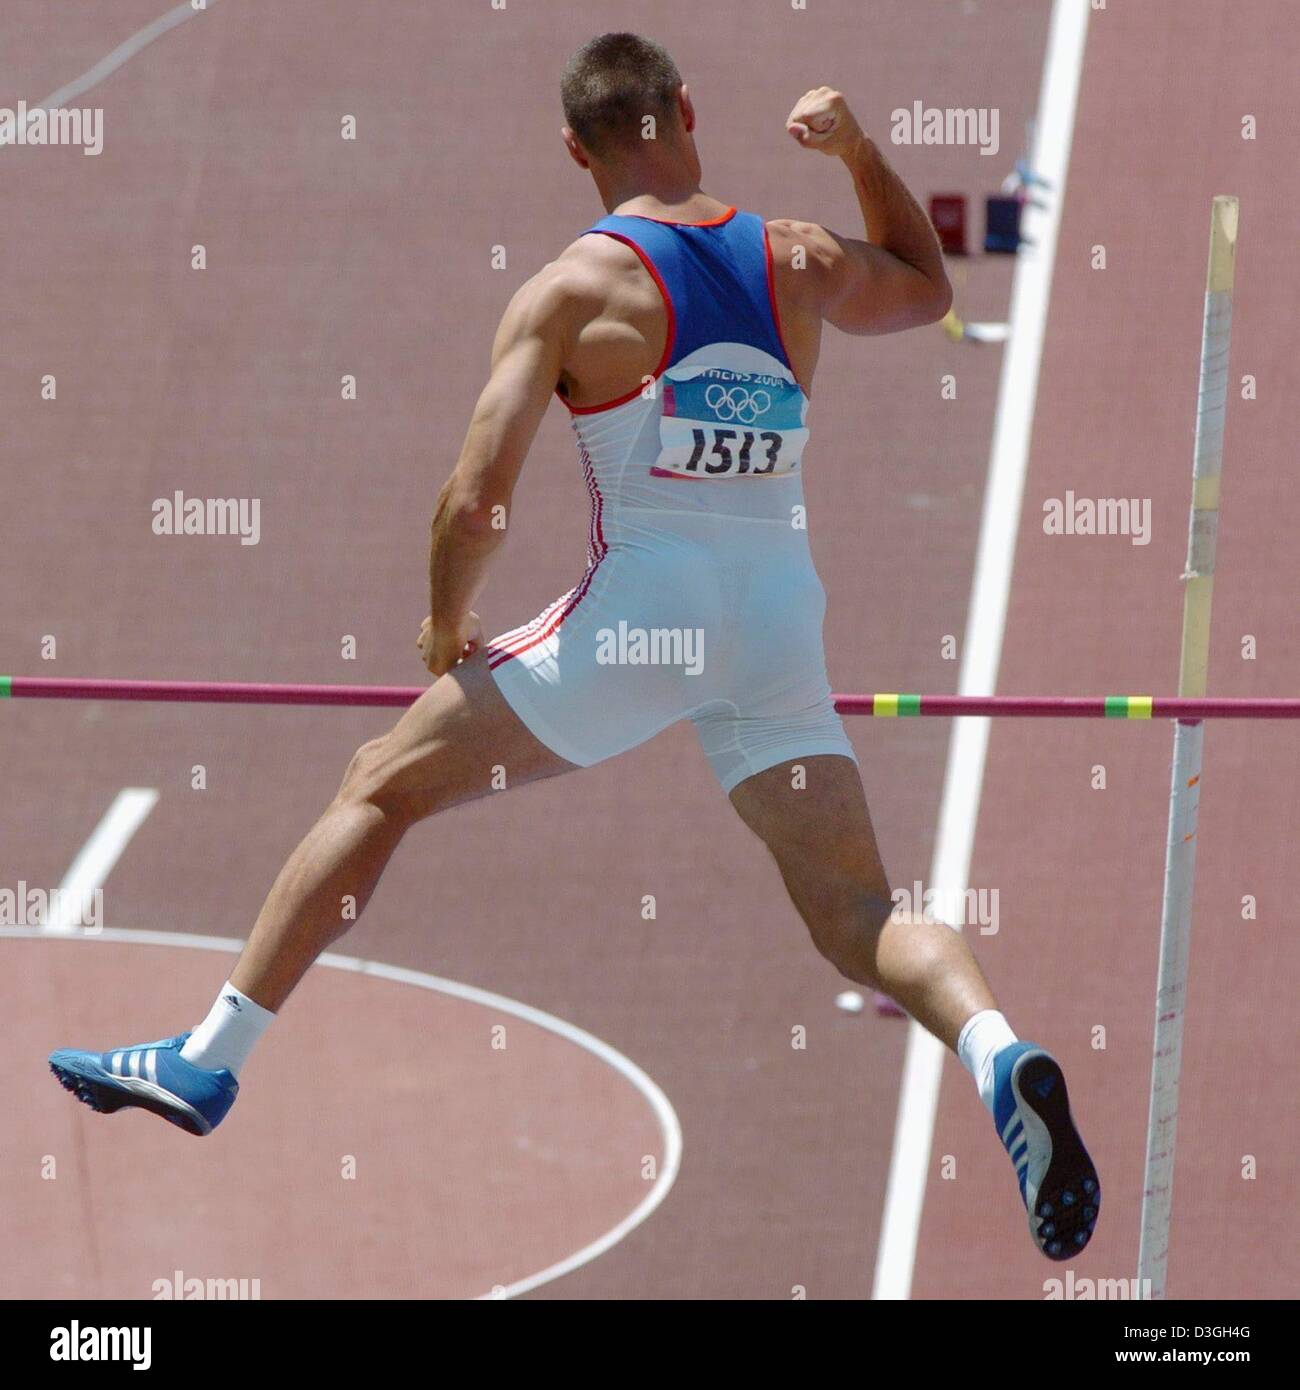 dpa) - World record holder Roman Sebrle 